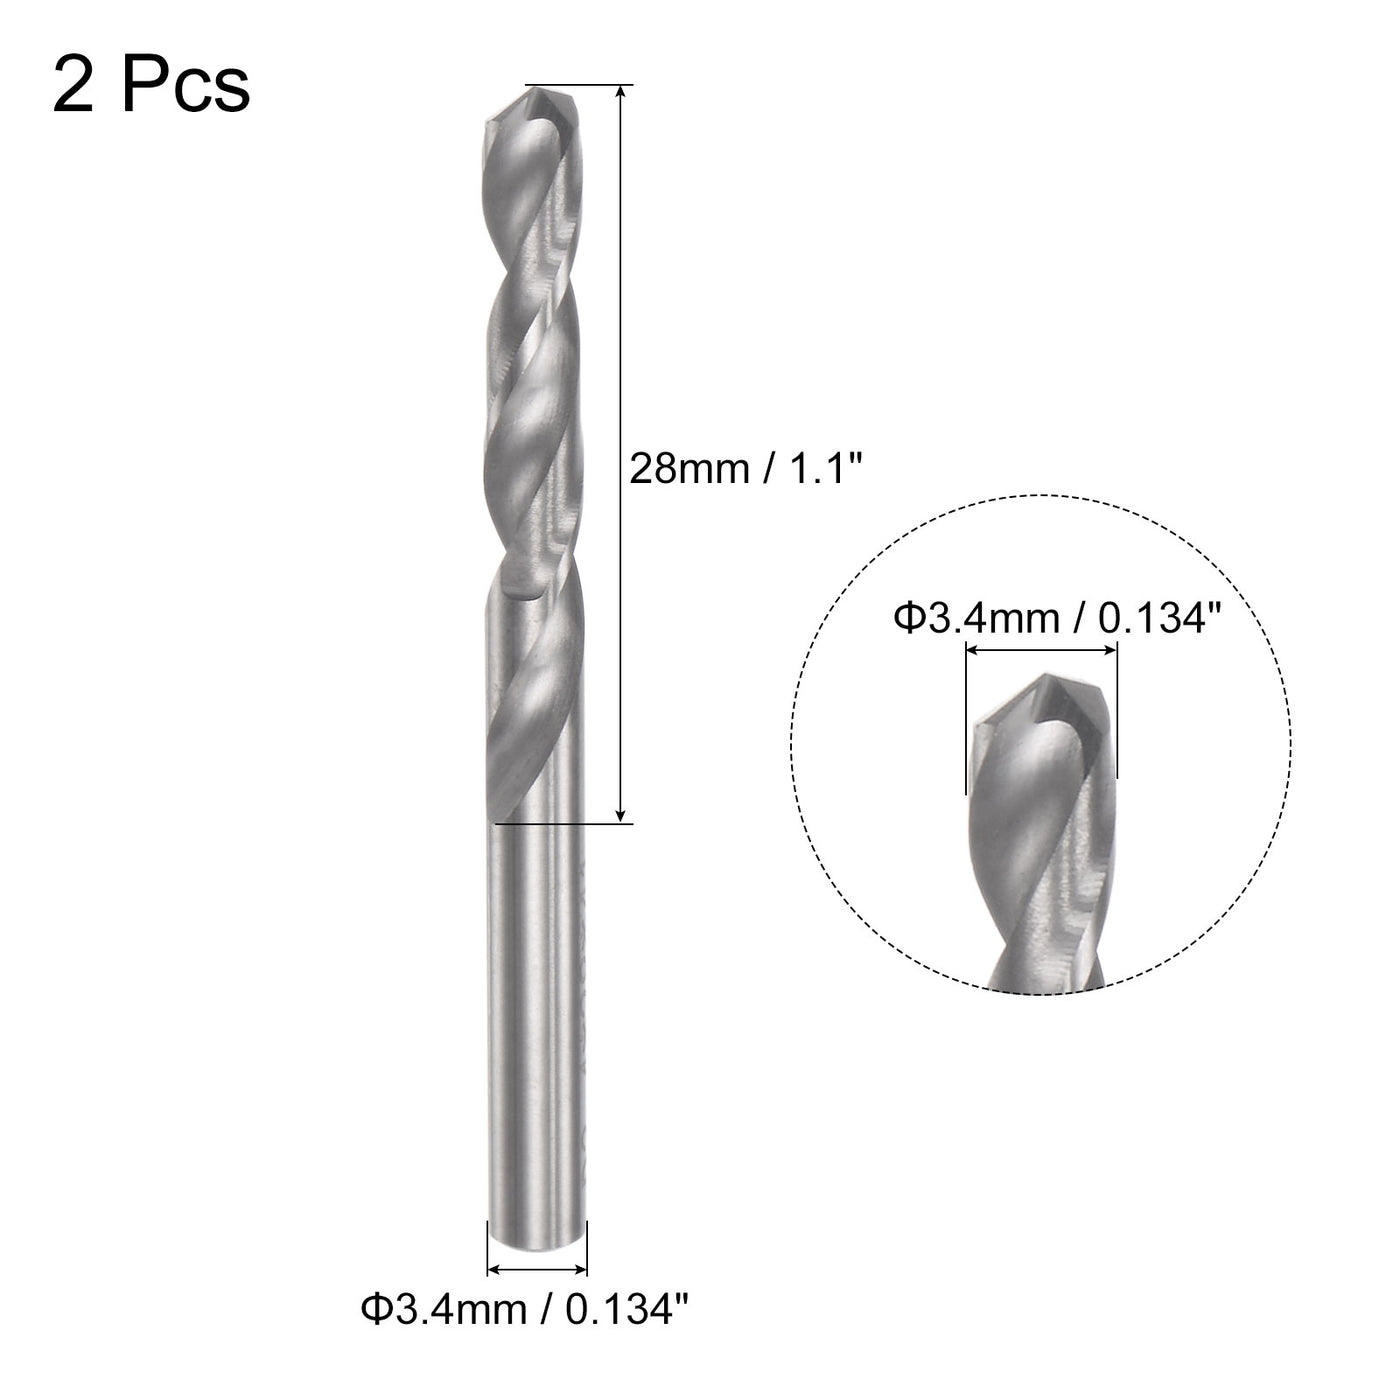 uxcell Uxcell 3.4mm C2/K20 Tungsten Carbide Straight Shank Spiral Flutes Twist Drill Bit 2pcs